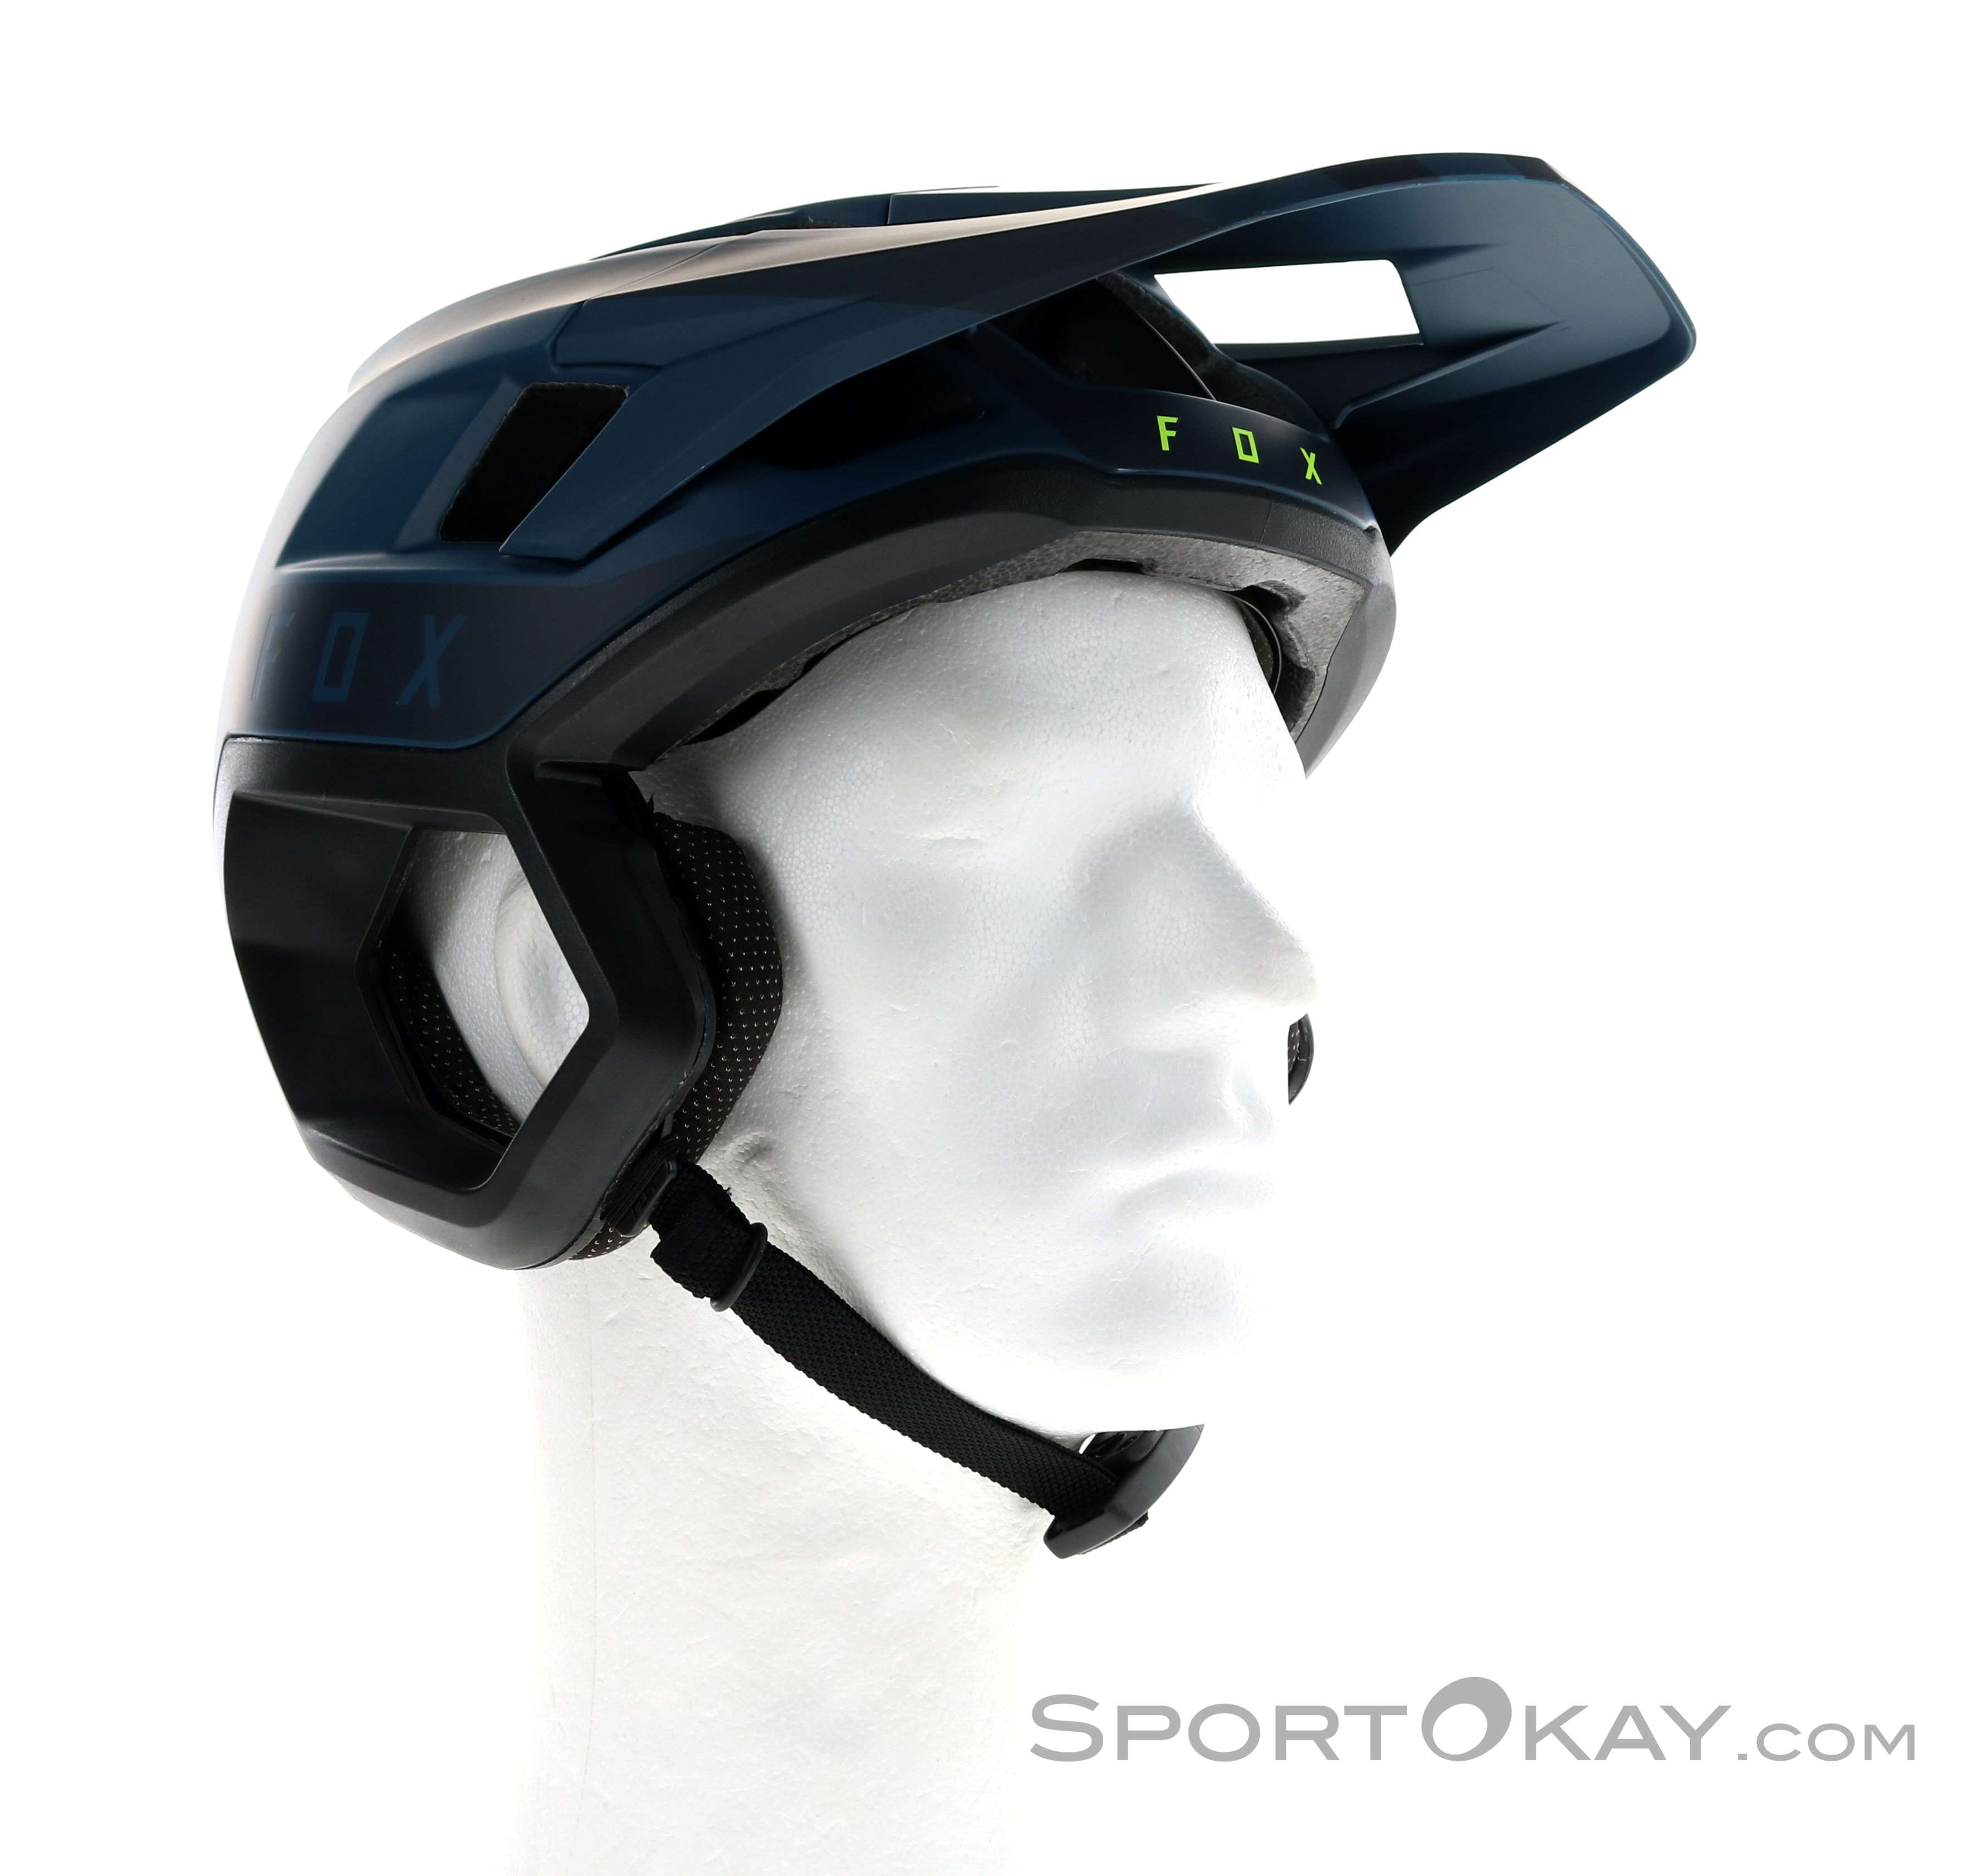 Details about   Fox Racing Dropframe Pro Downhill MTB Bicycle Helmet Two Tone Dark Indigo Medium 